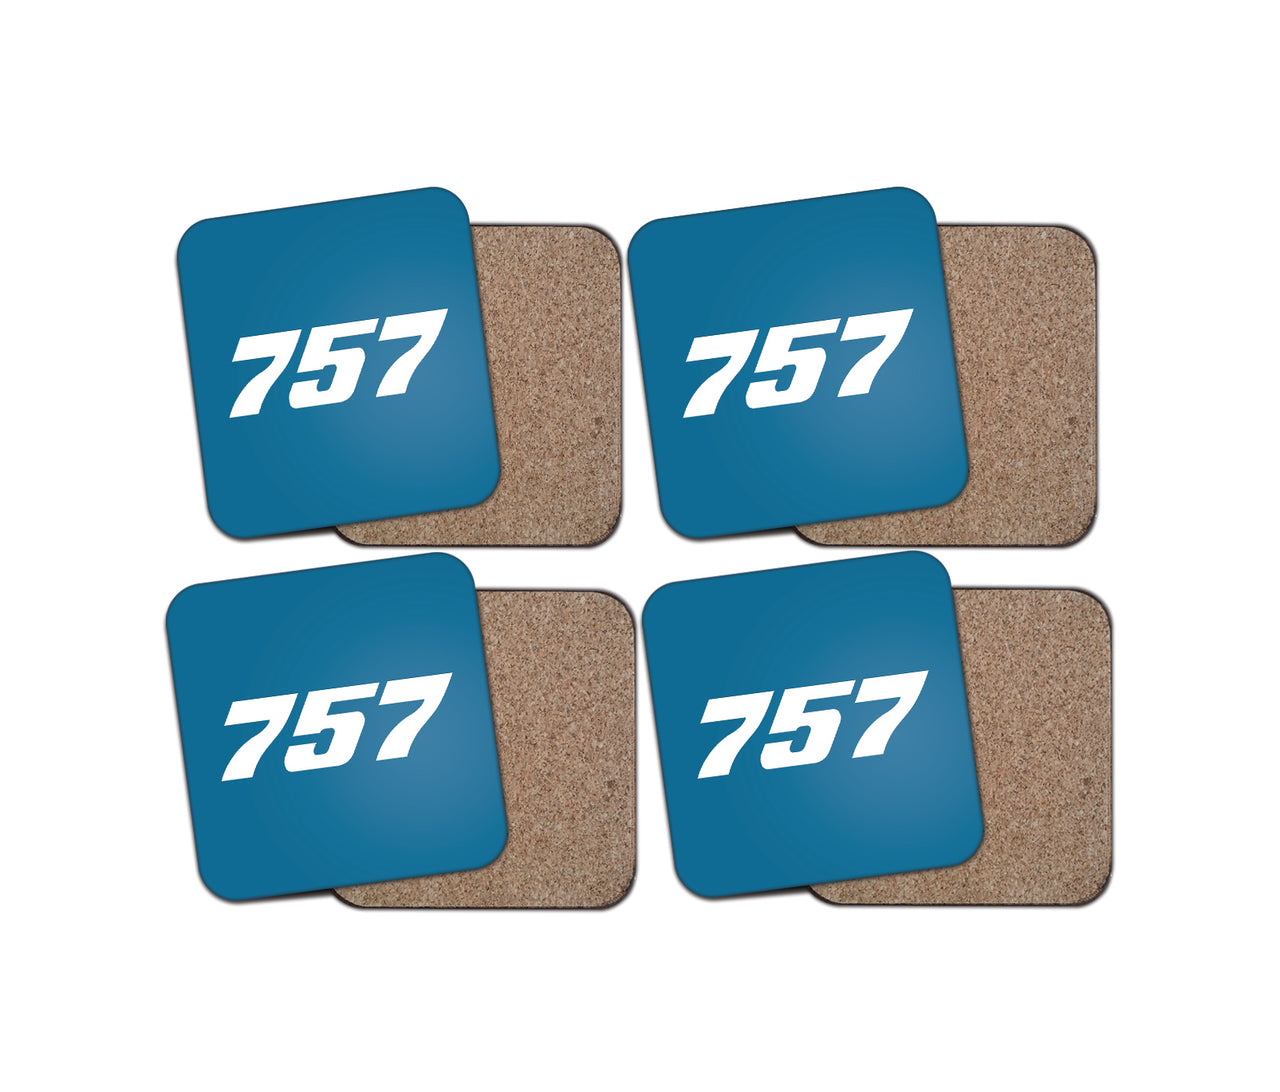 757 Flat Text Designed Coasters